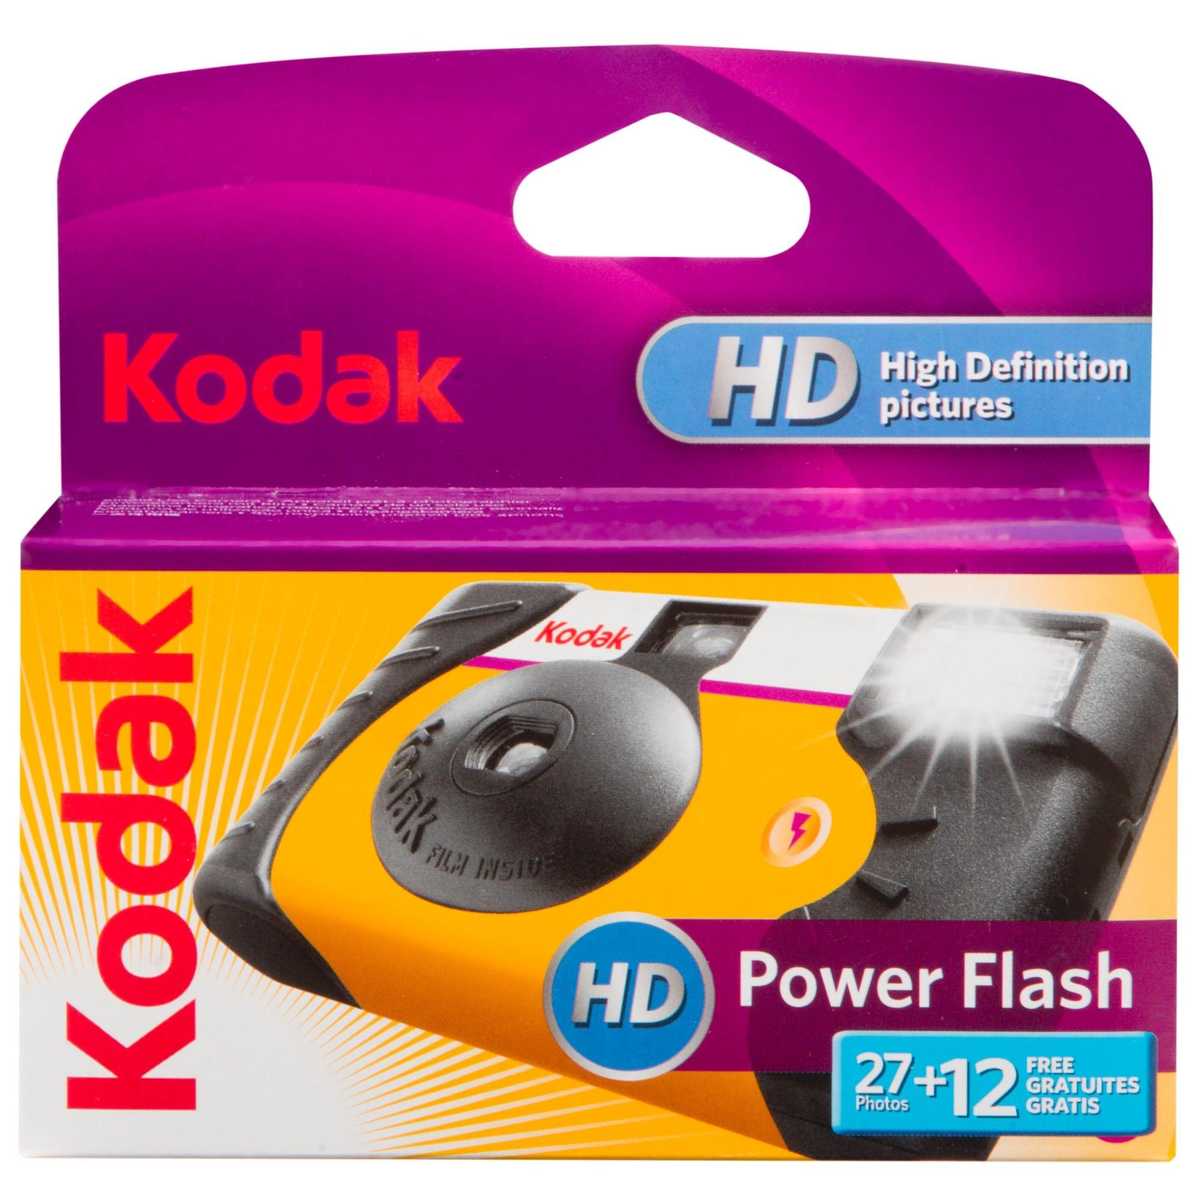 Kodak Compact HD Power Flash